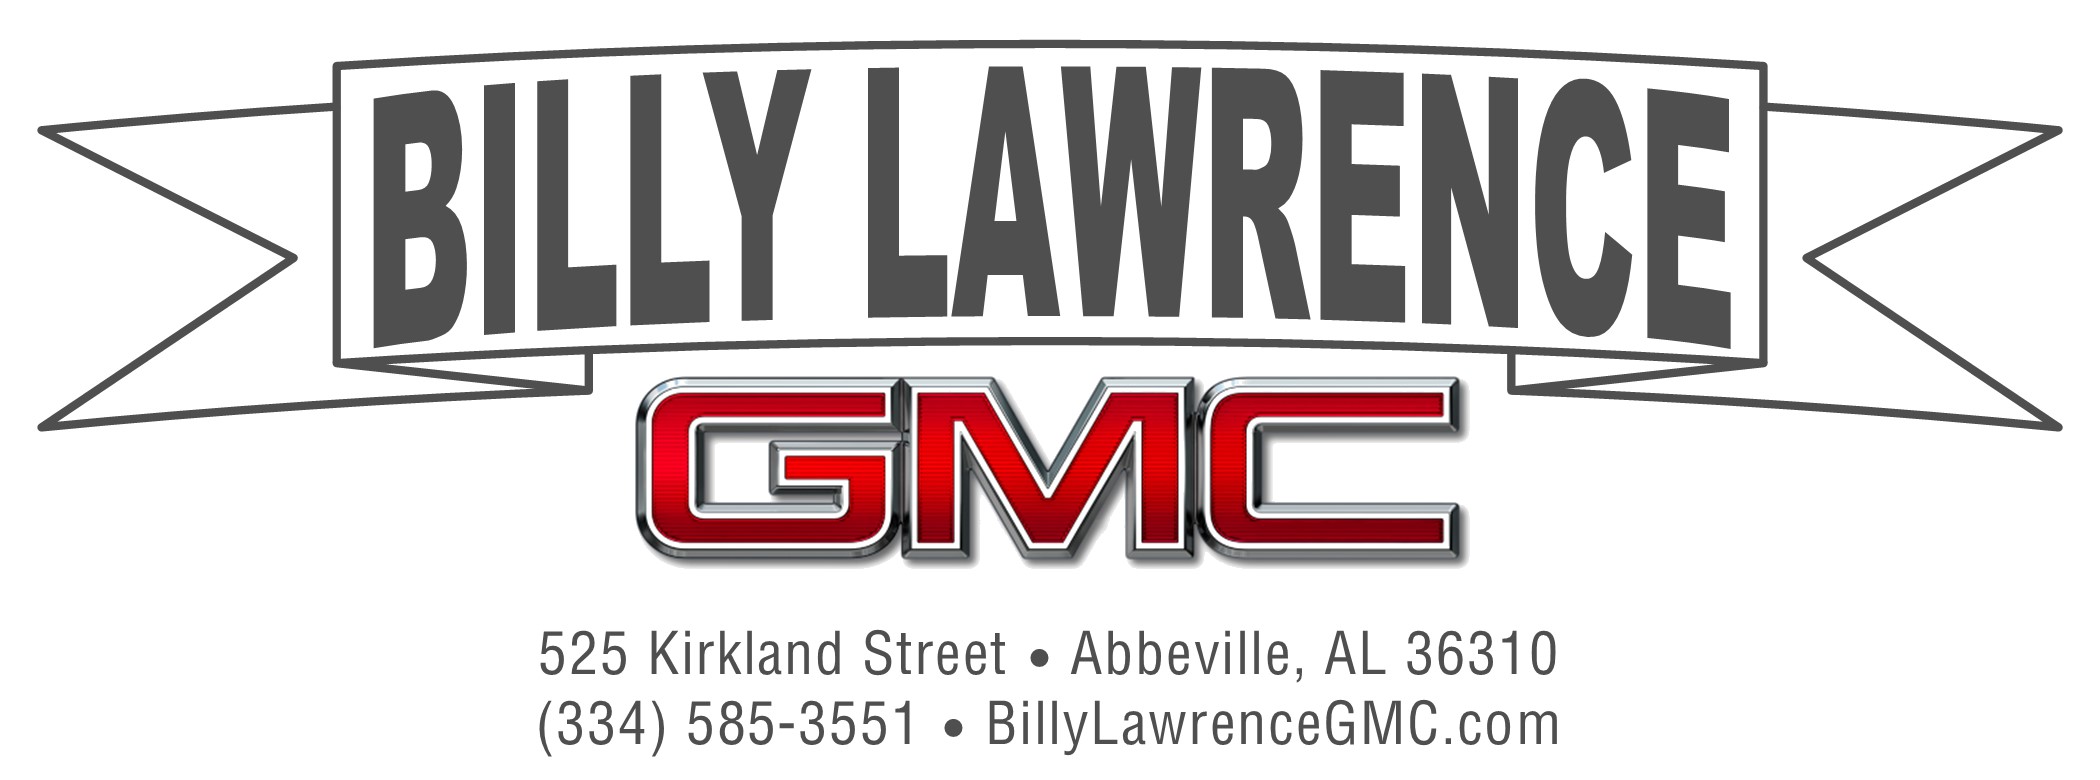 Billy Lawrence GMC